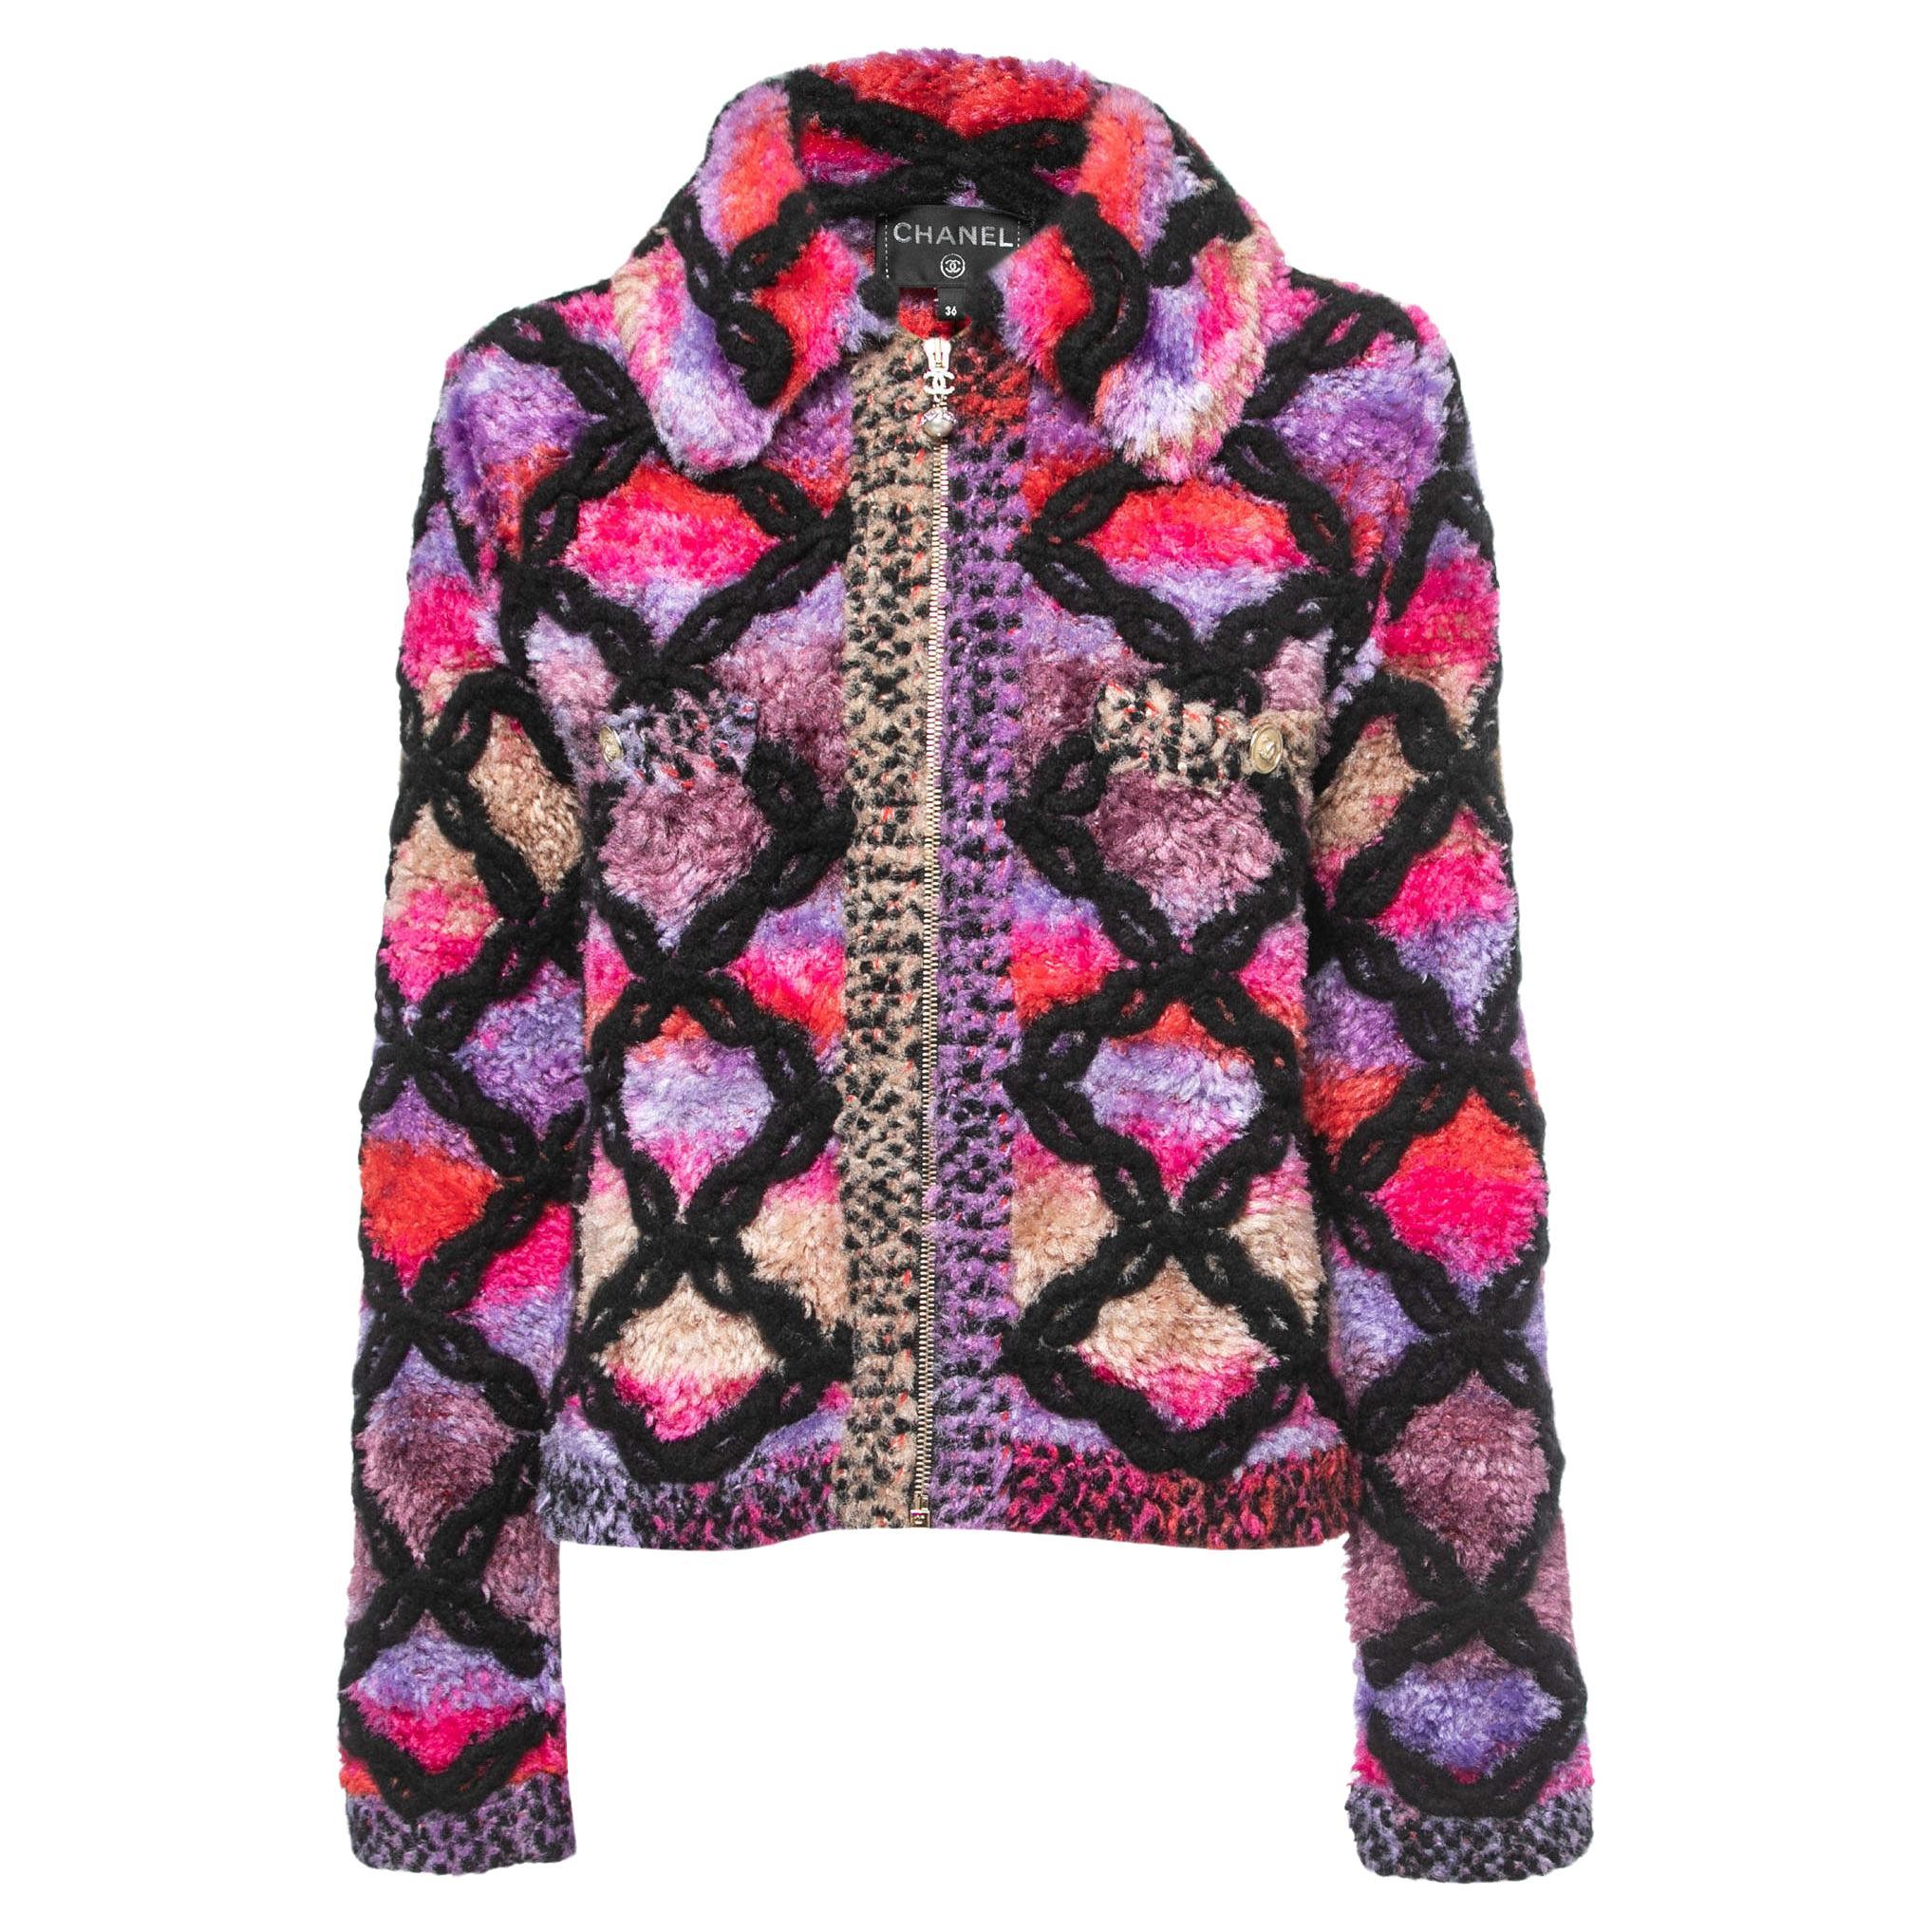 Chanel Python Jacket - For Sale on 1stDibs